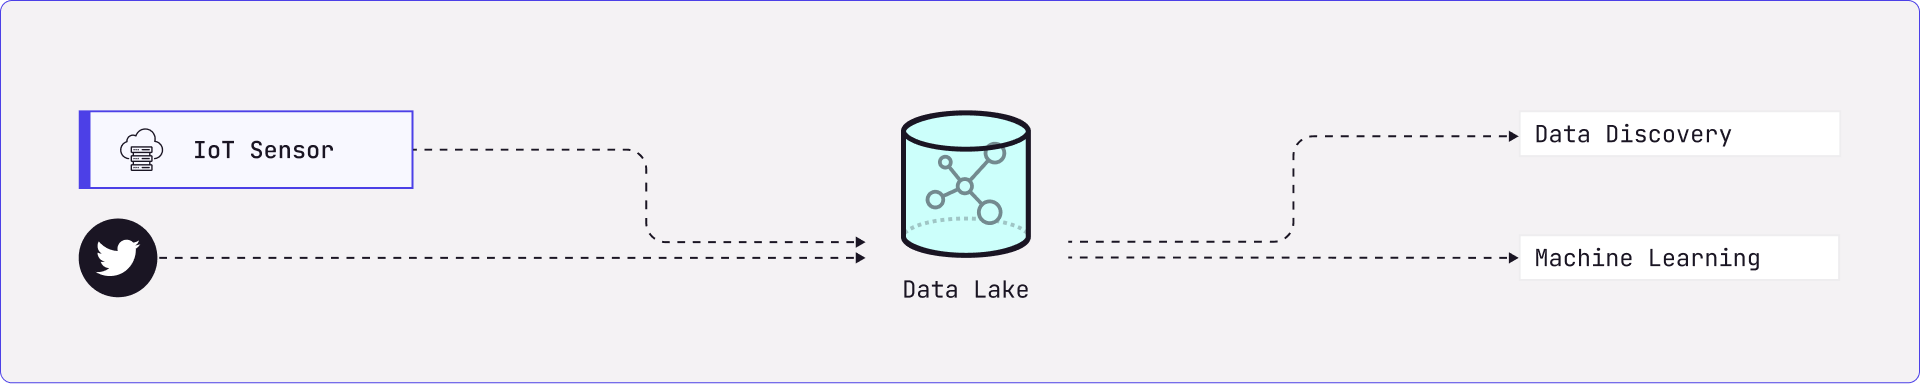 Data lake diagram